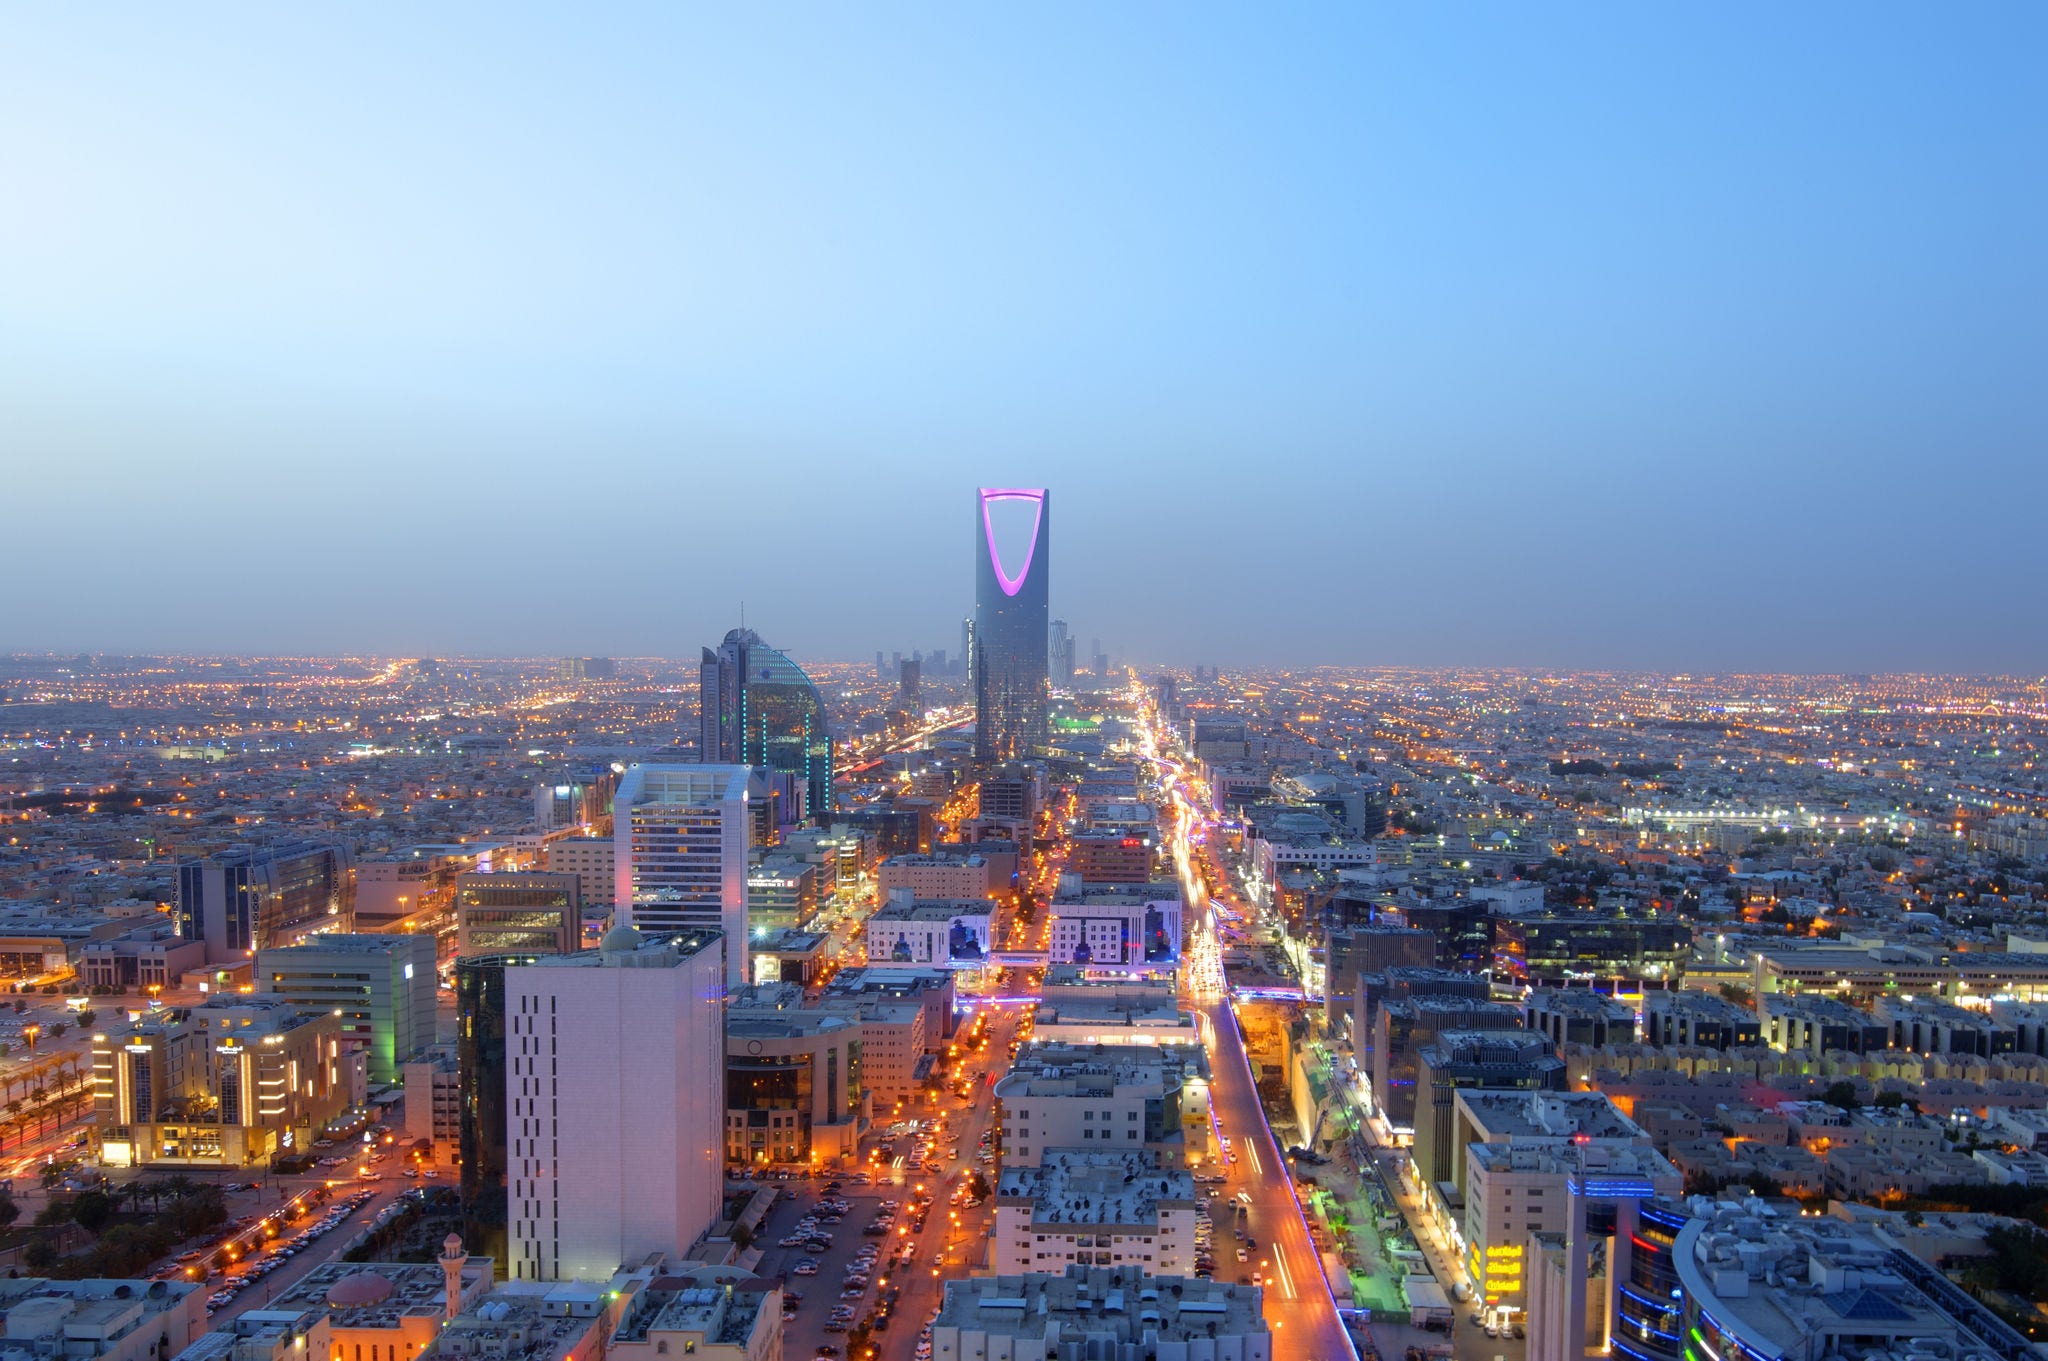 Riyadh skyline at night, Saudi Arabia